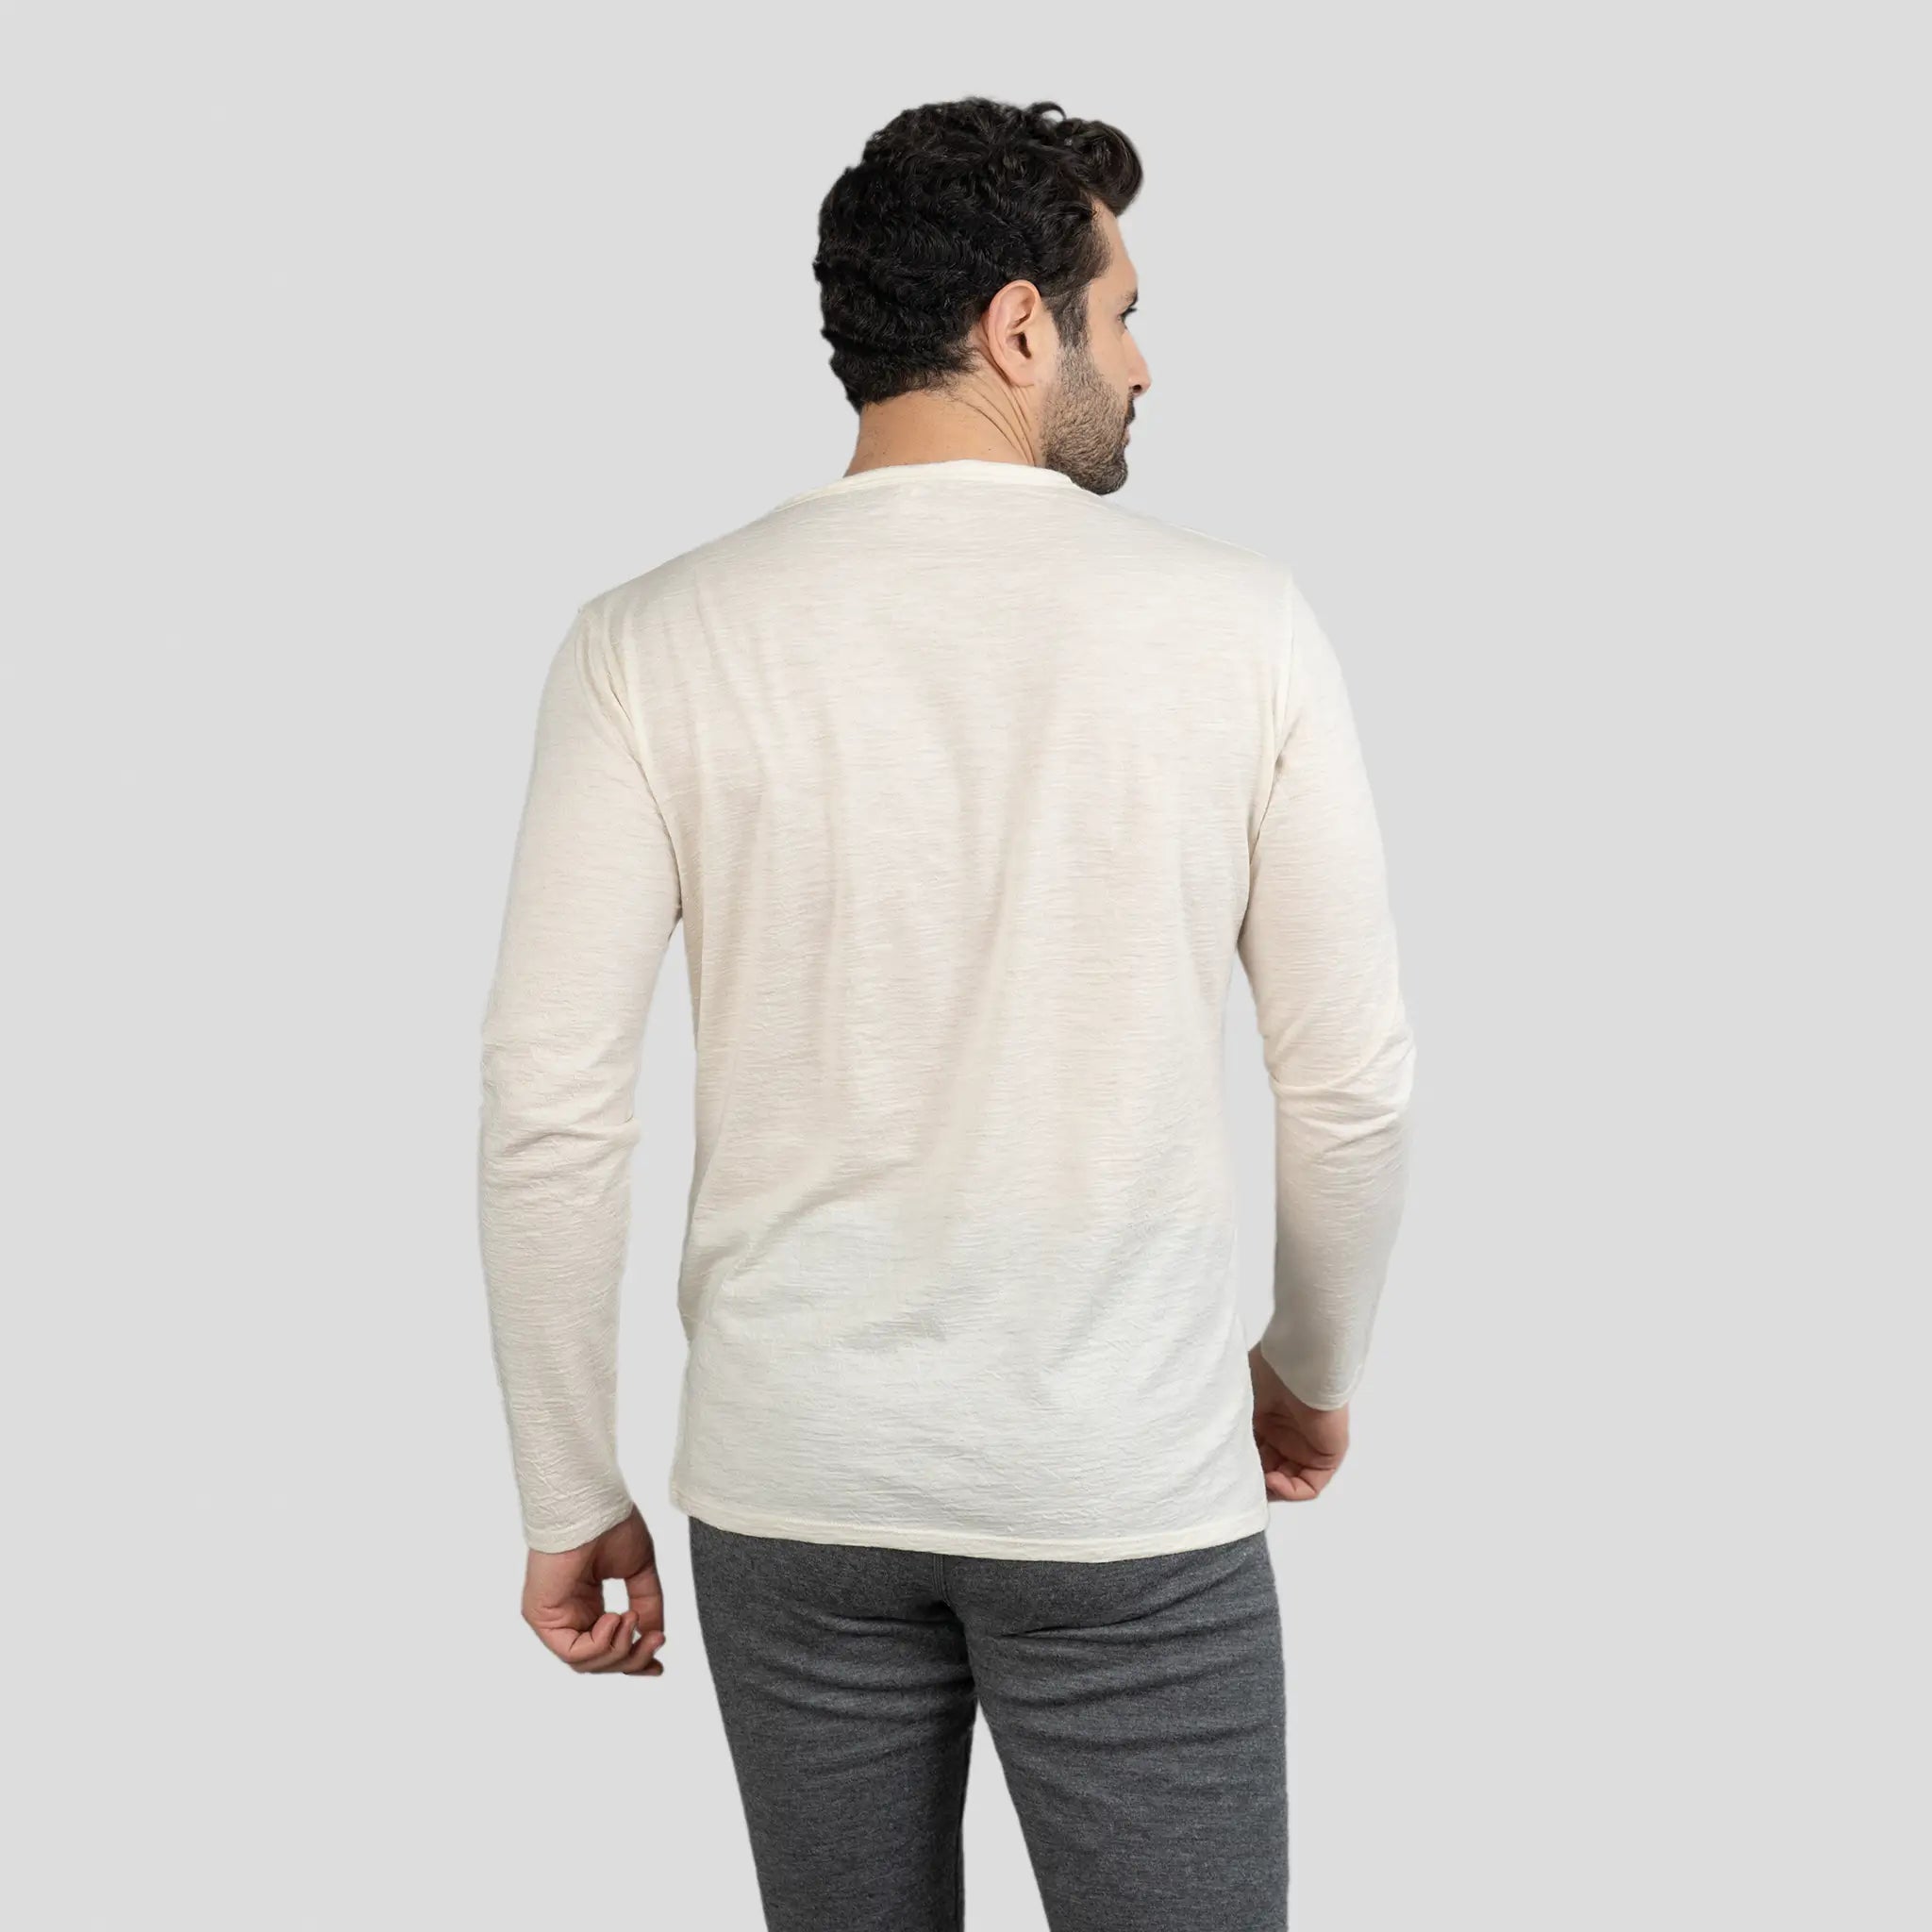 mens uv resistance long sleeve tshirt color natural white